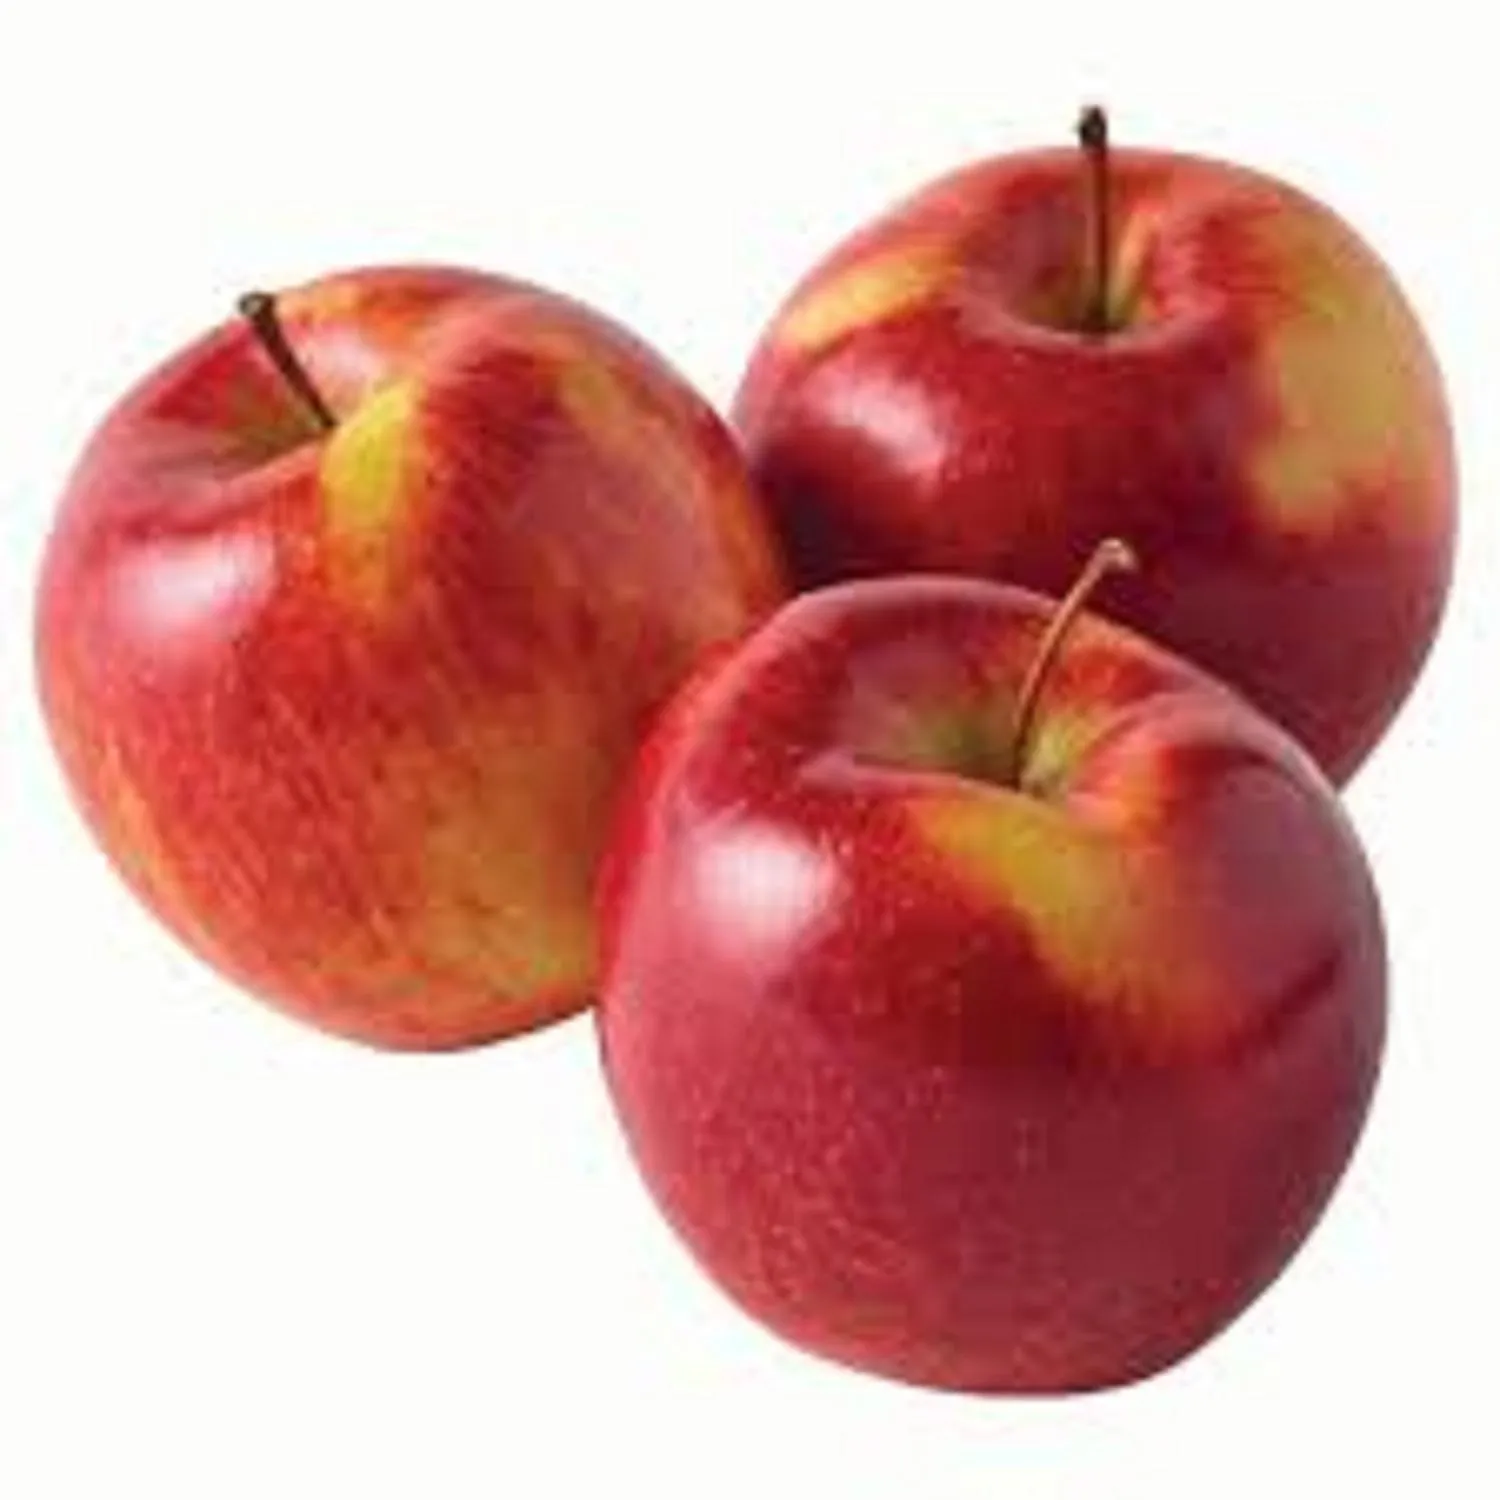 Buy apple fruit suppliers in Australia + best price